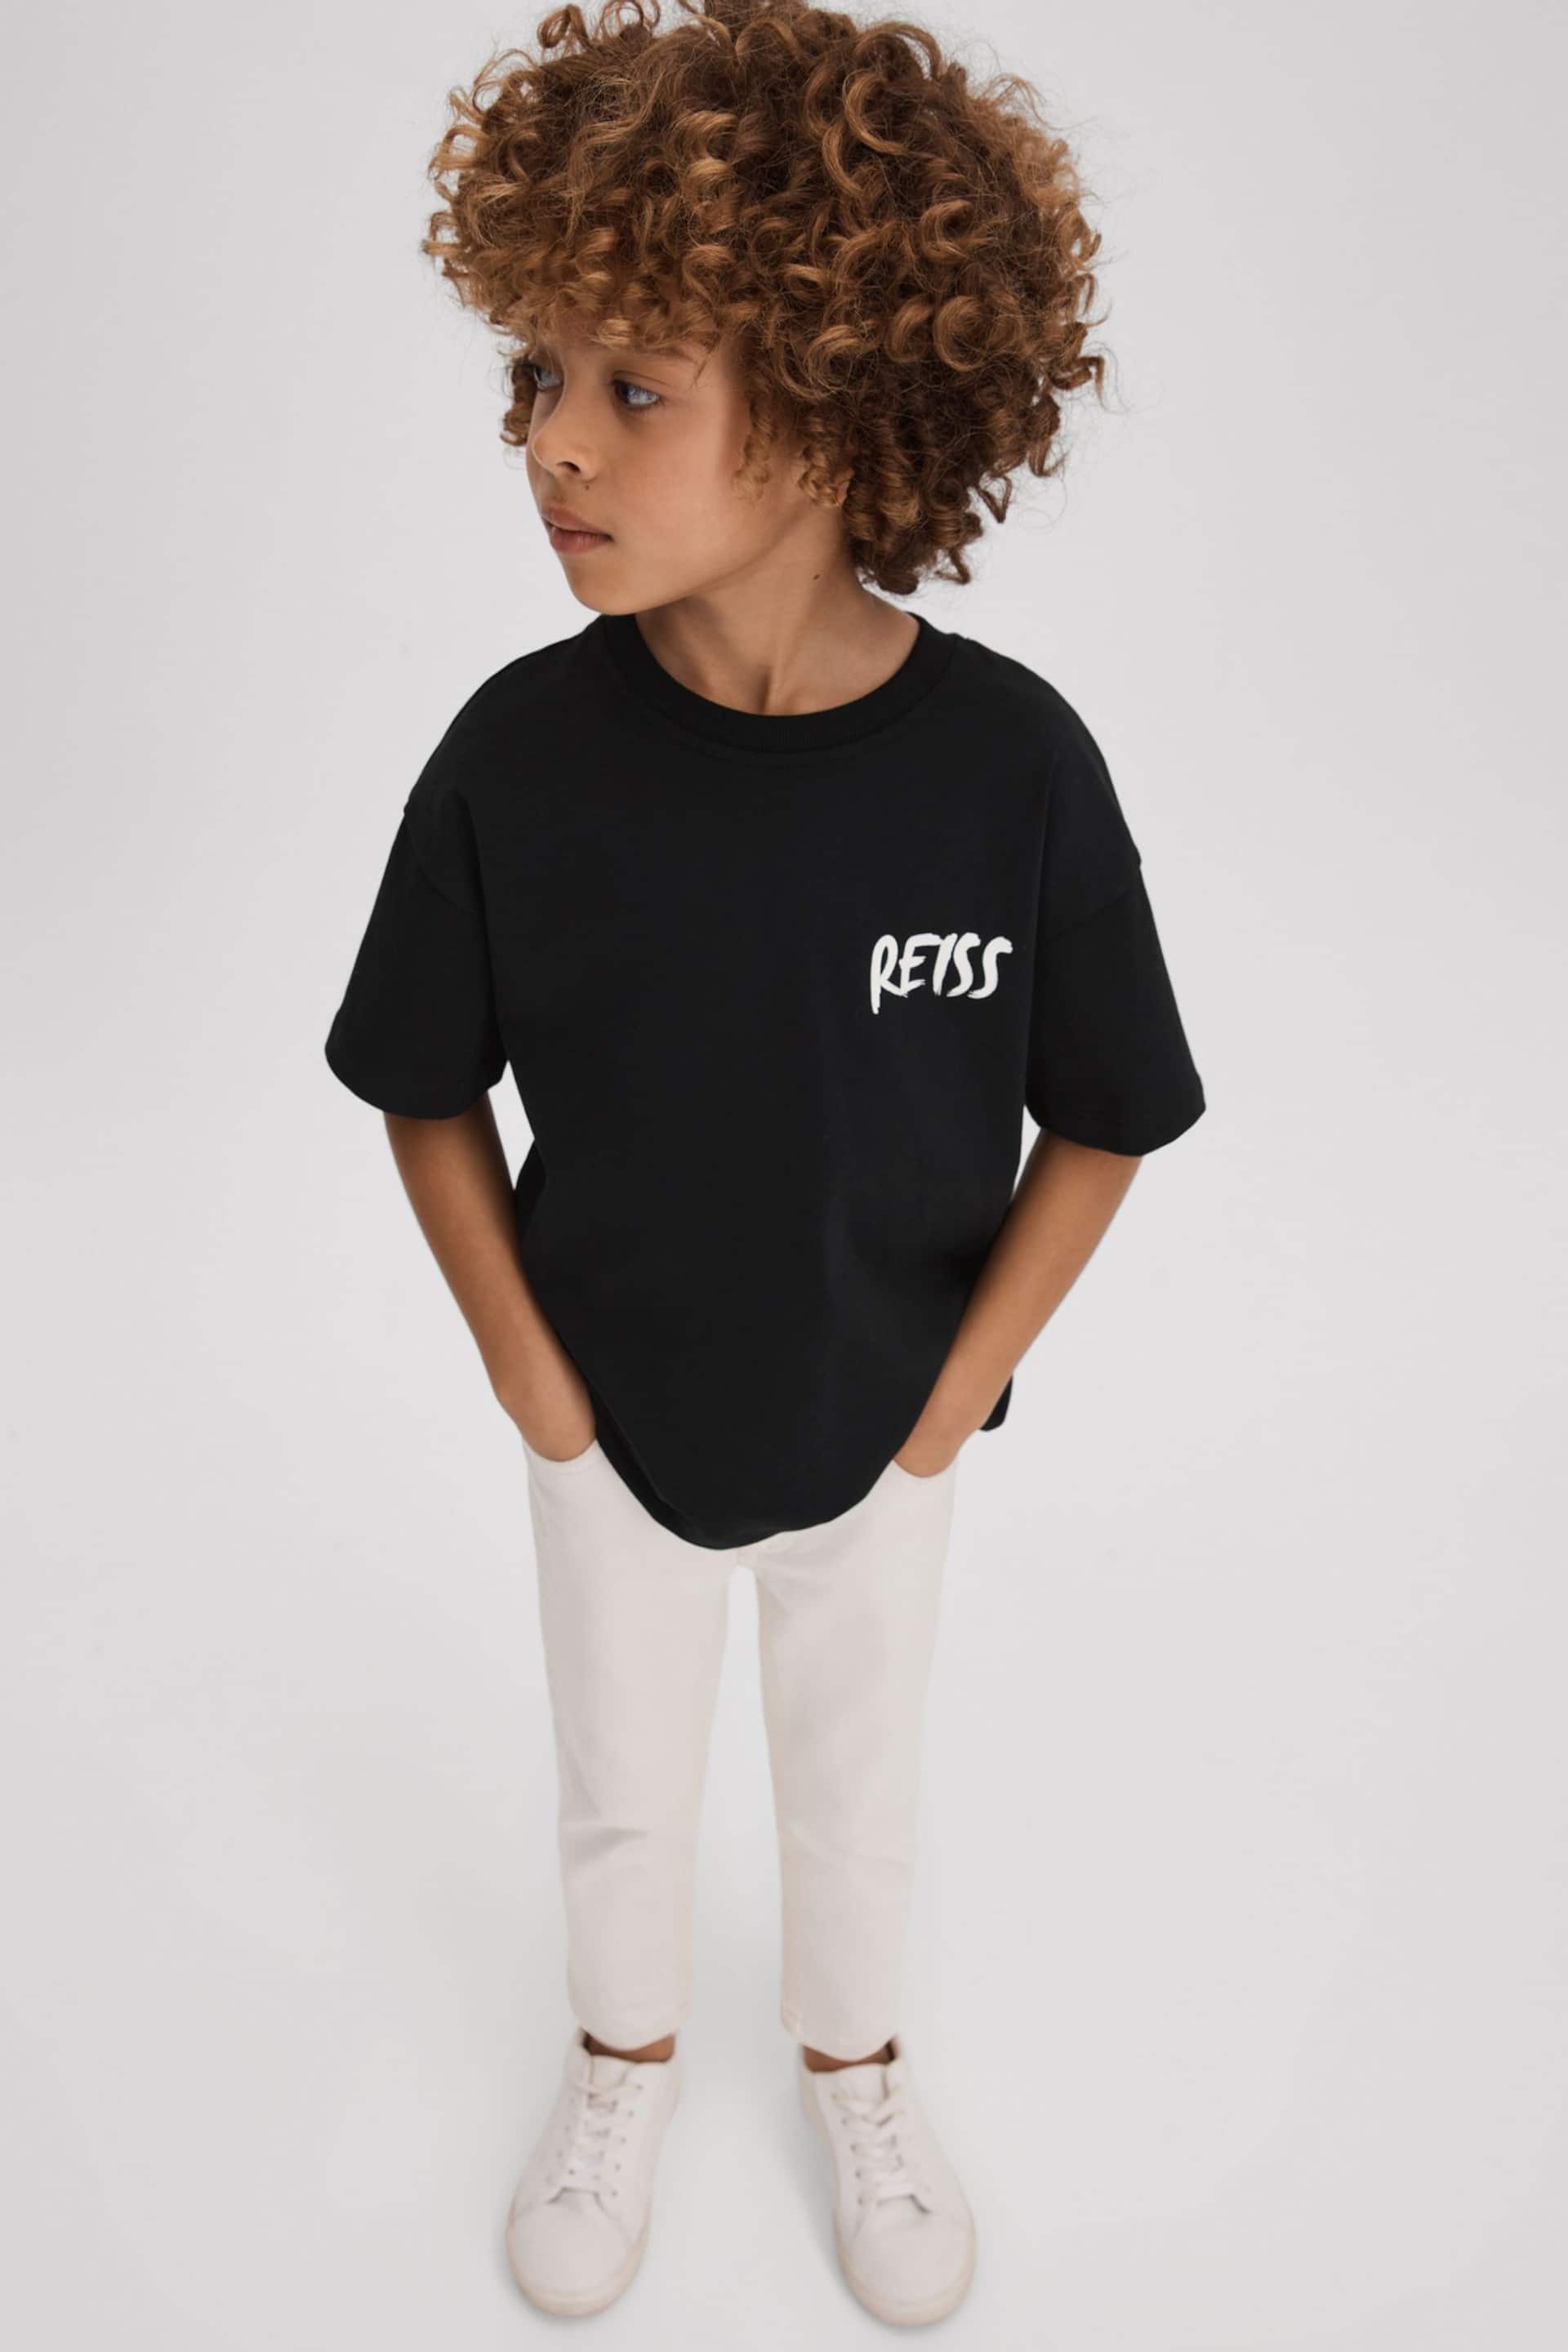 Reiss Washed Black Abbott Teen Cotton Motif T-Shirt - Image 2 of 4